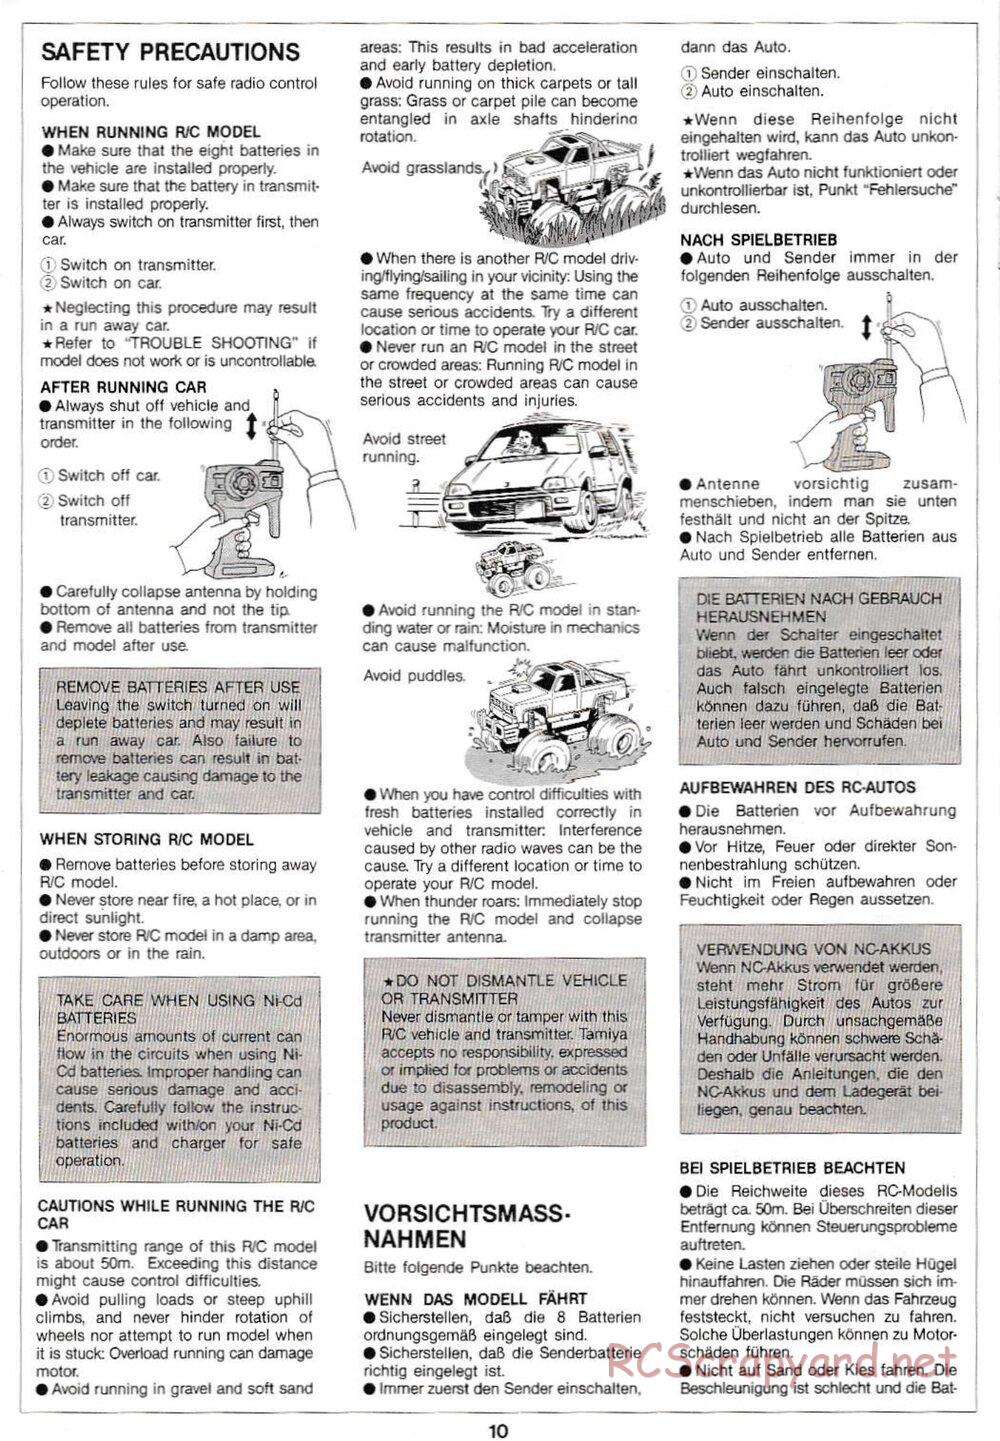 Tamiya - Clod Buster QD Chassis - Manual - Page 10